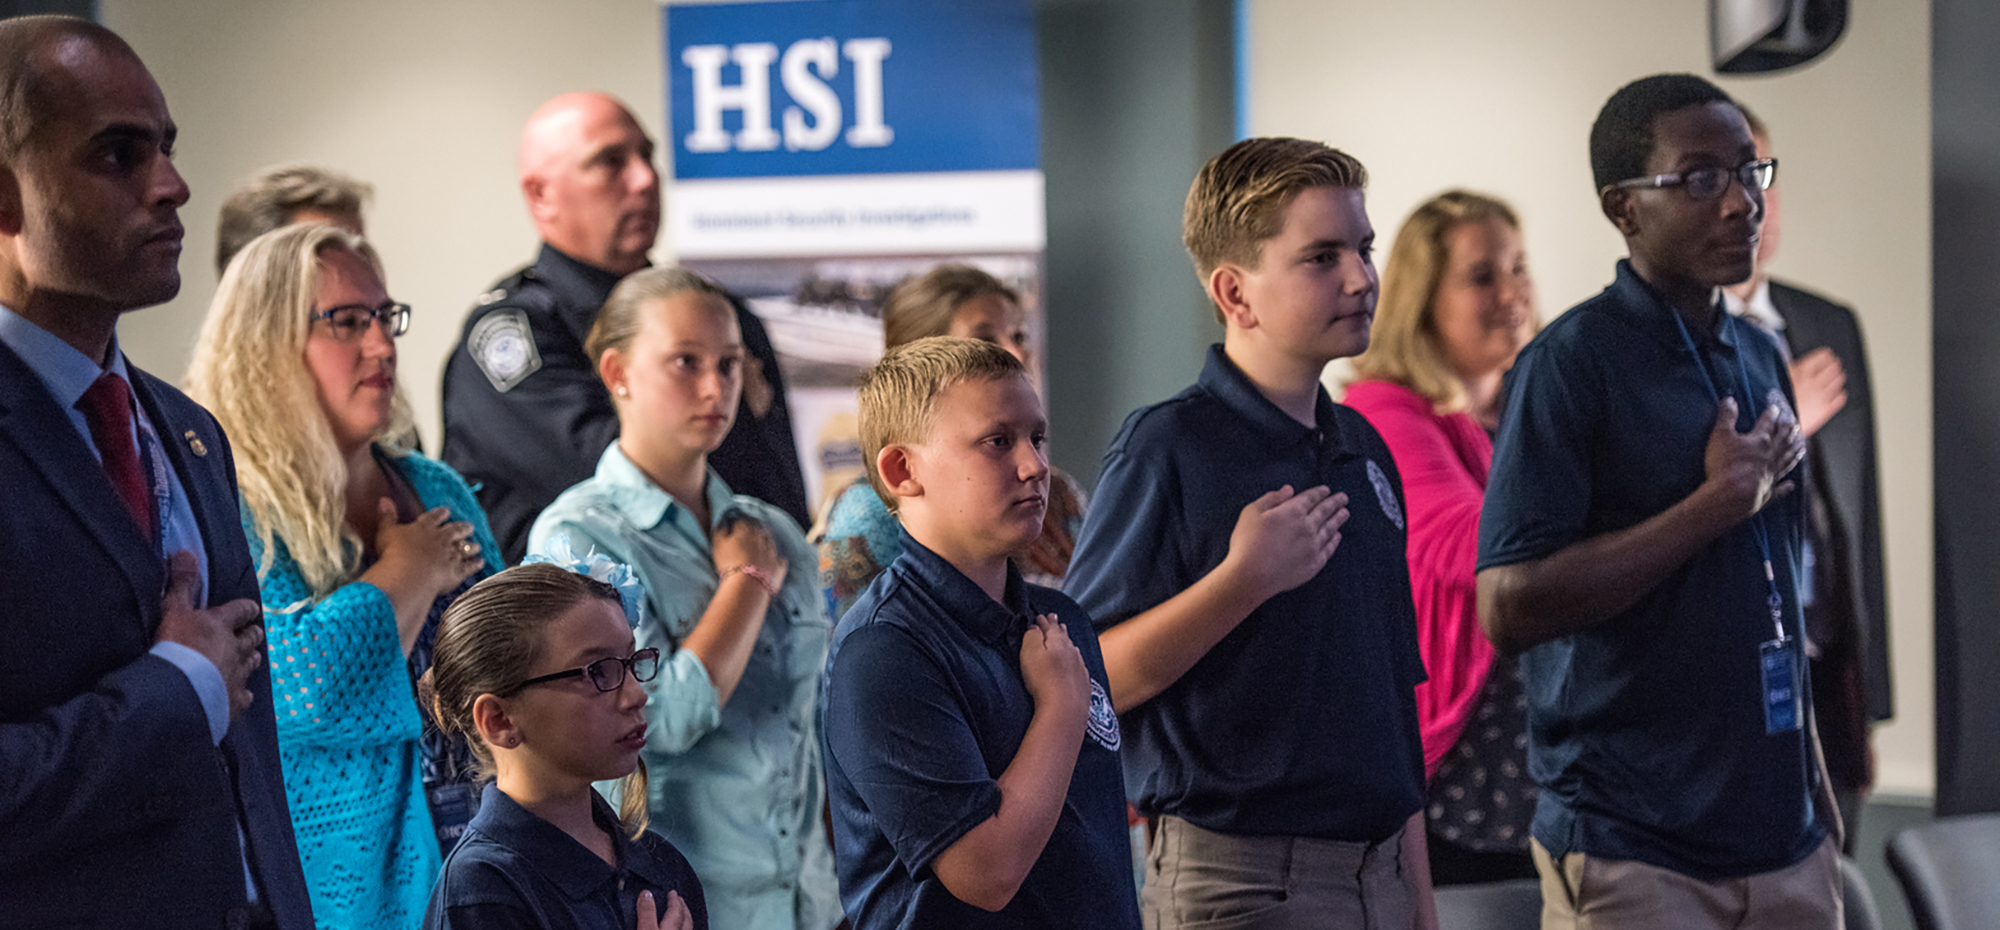 ICE holds HSI Cadet Program graduation